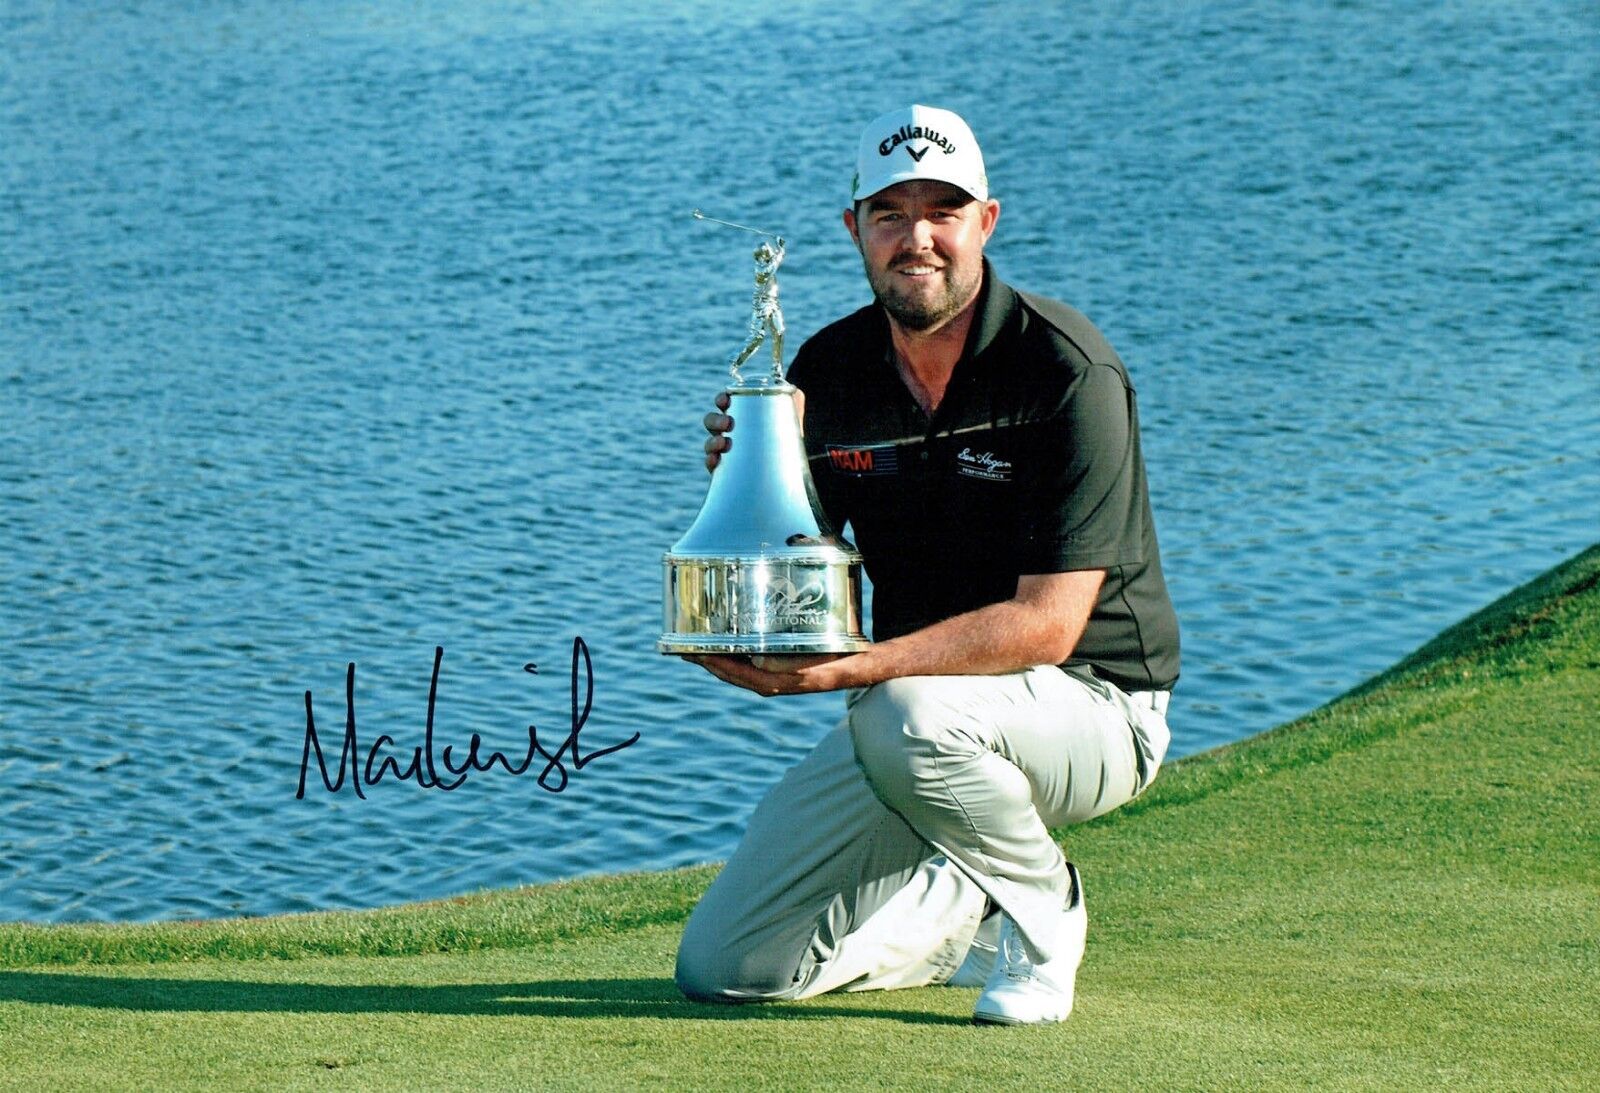 Marc LEISHMAN Signed 12x8 Photo Poster painting 1 PGA Tour Golf Winner Autograph AFTAL COA